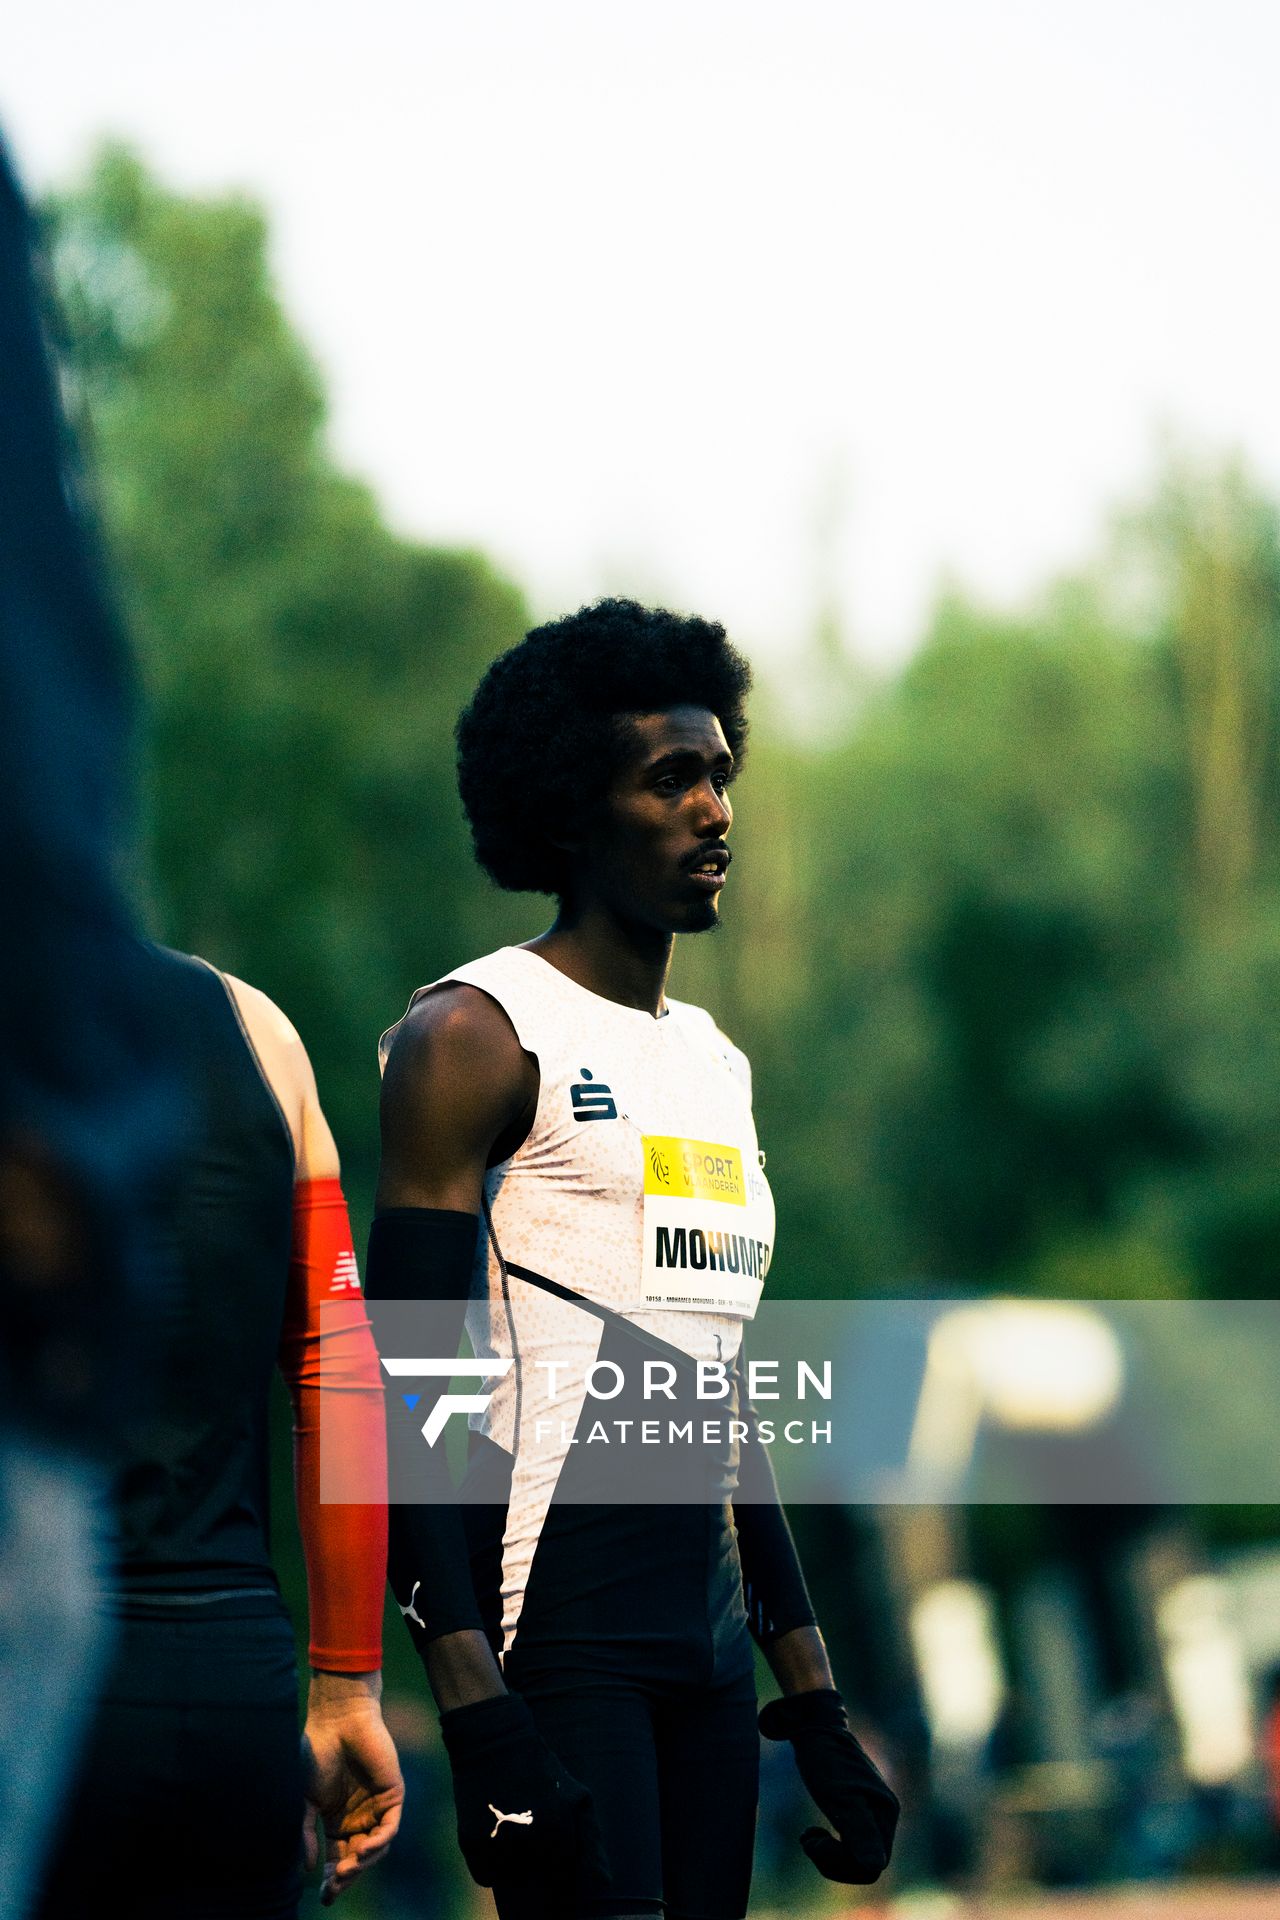 Mohamed Mohumed (LG Olympia Dortmund) ueber 1500m am 28.05.2022 waehrend der World Athletics Continental Tour IFAM Oordegem in Oordegem